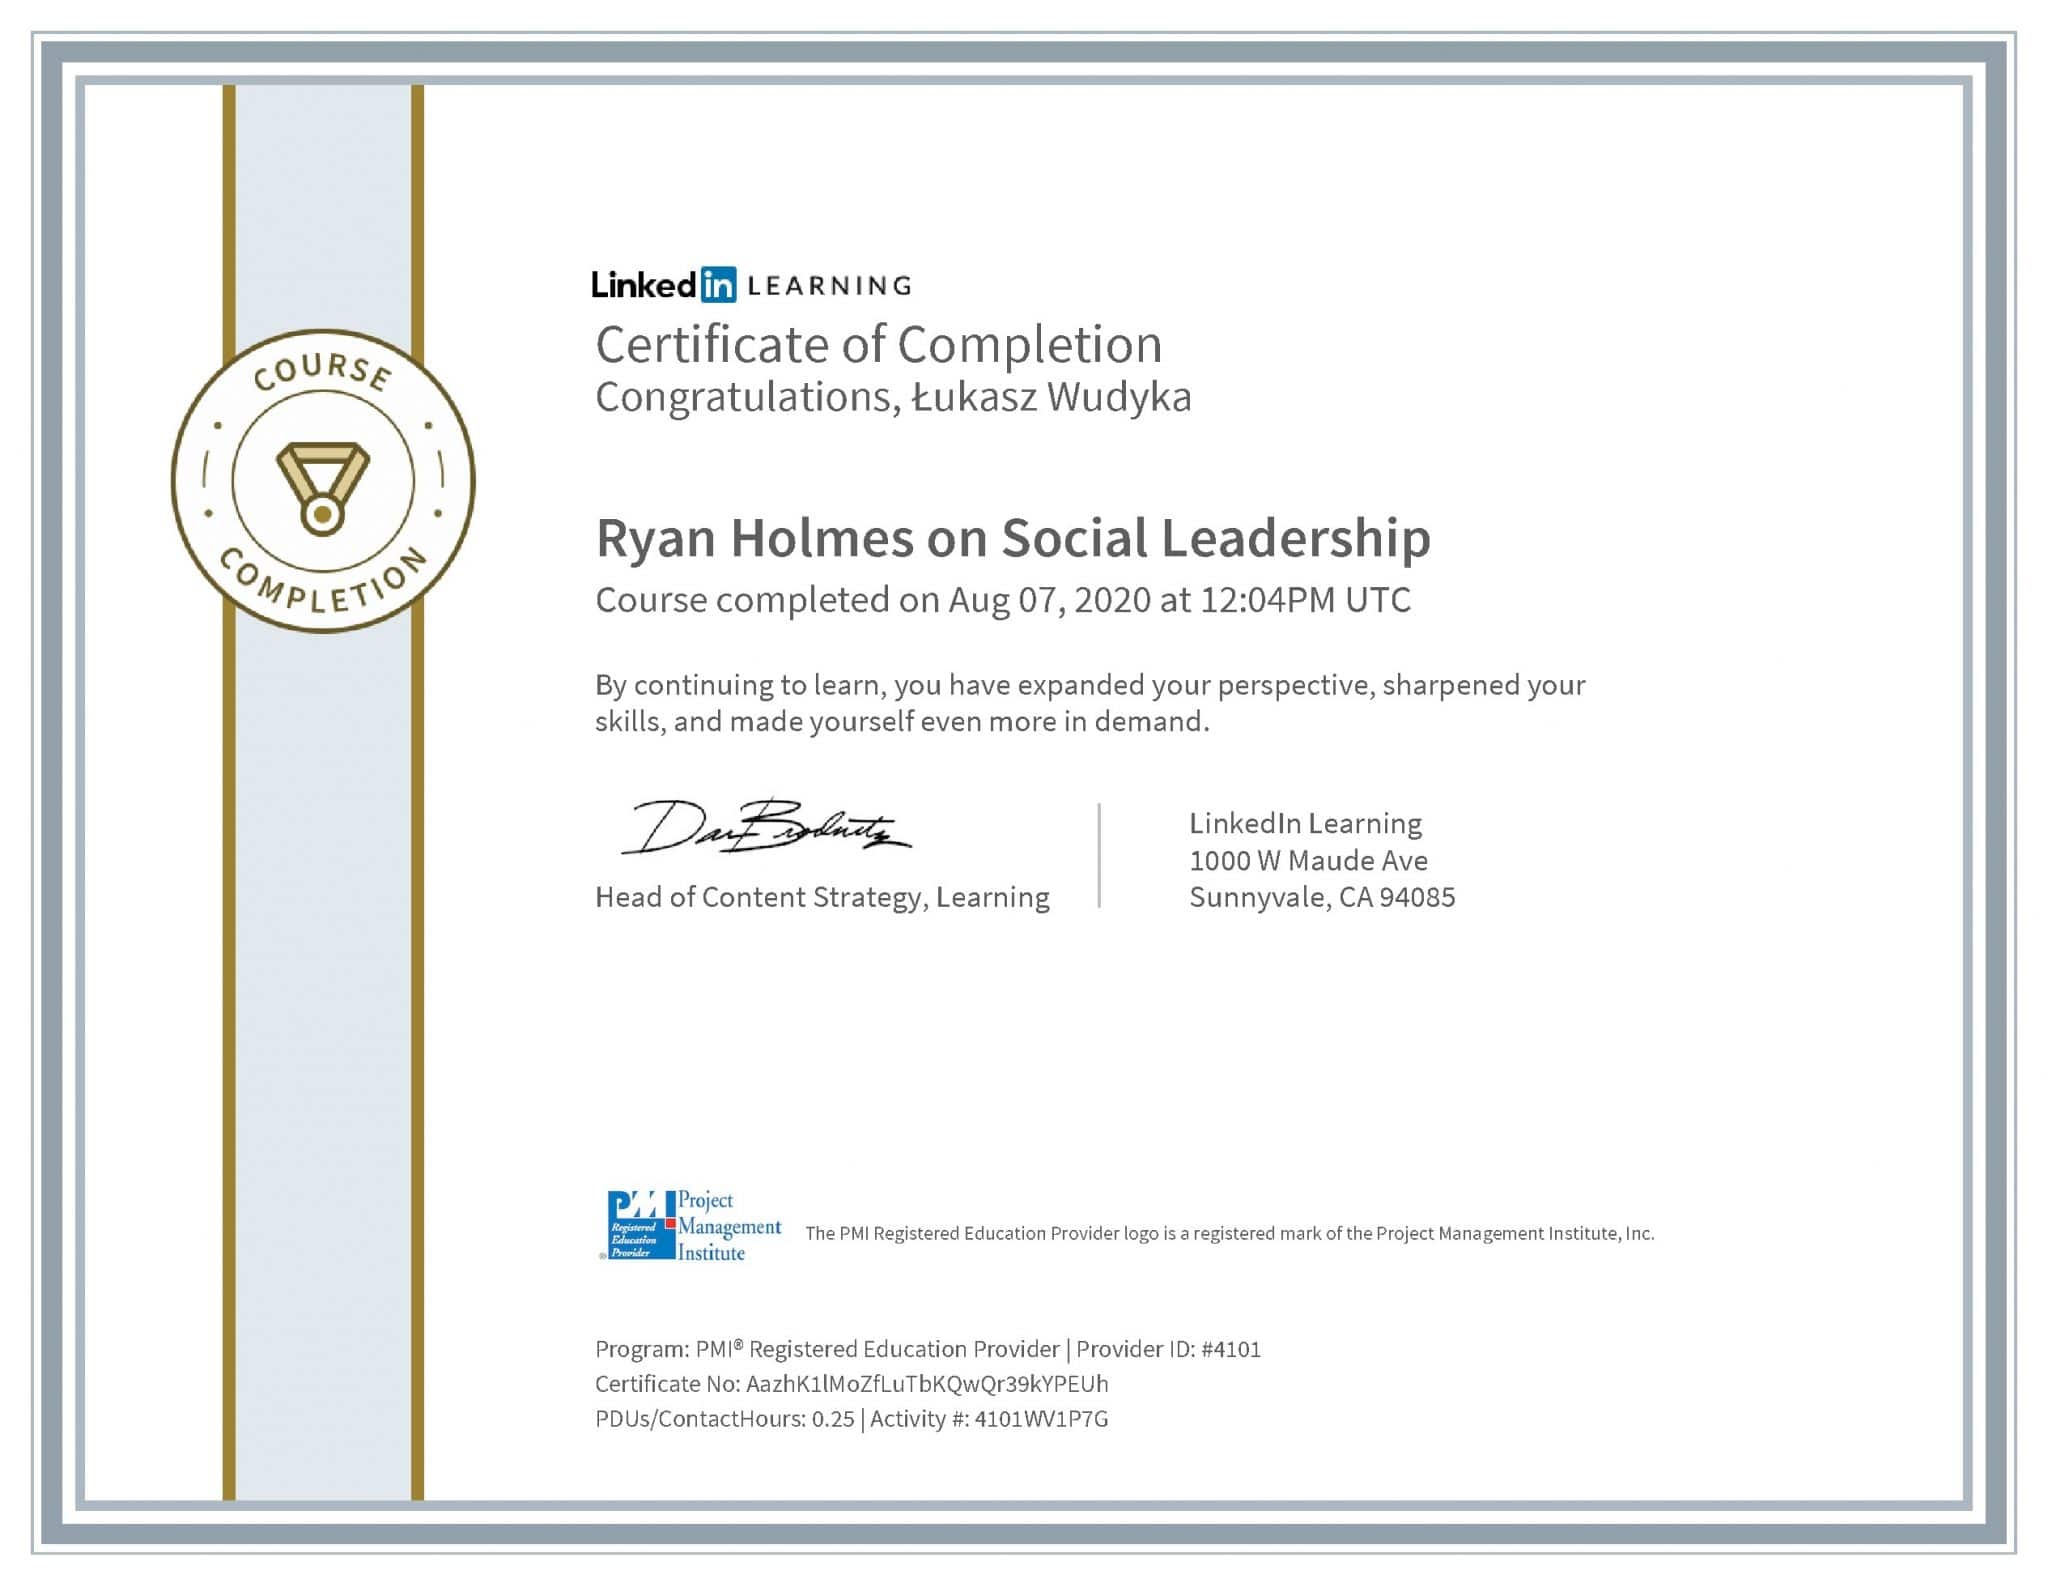 Łukasz Wudyka certyfikat LinkedIn Ryan Holmes on Social Leadership PMI